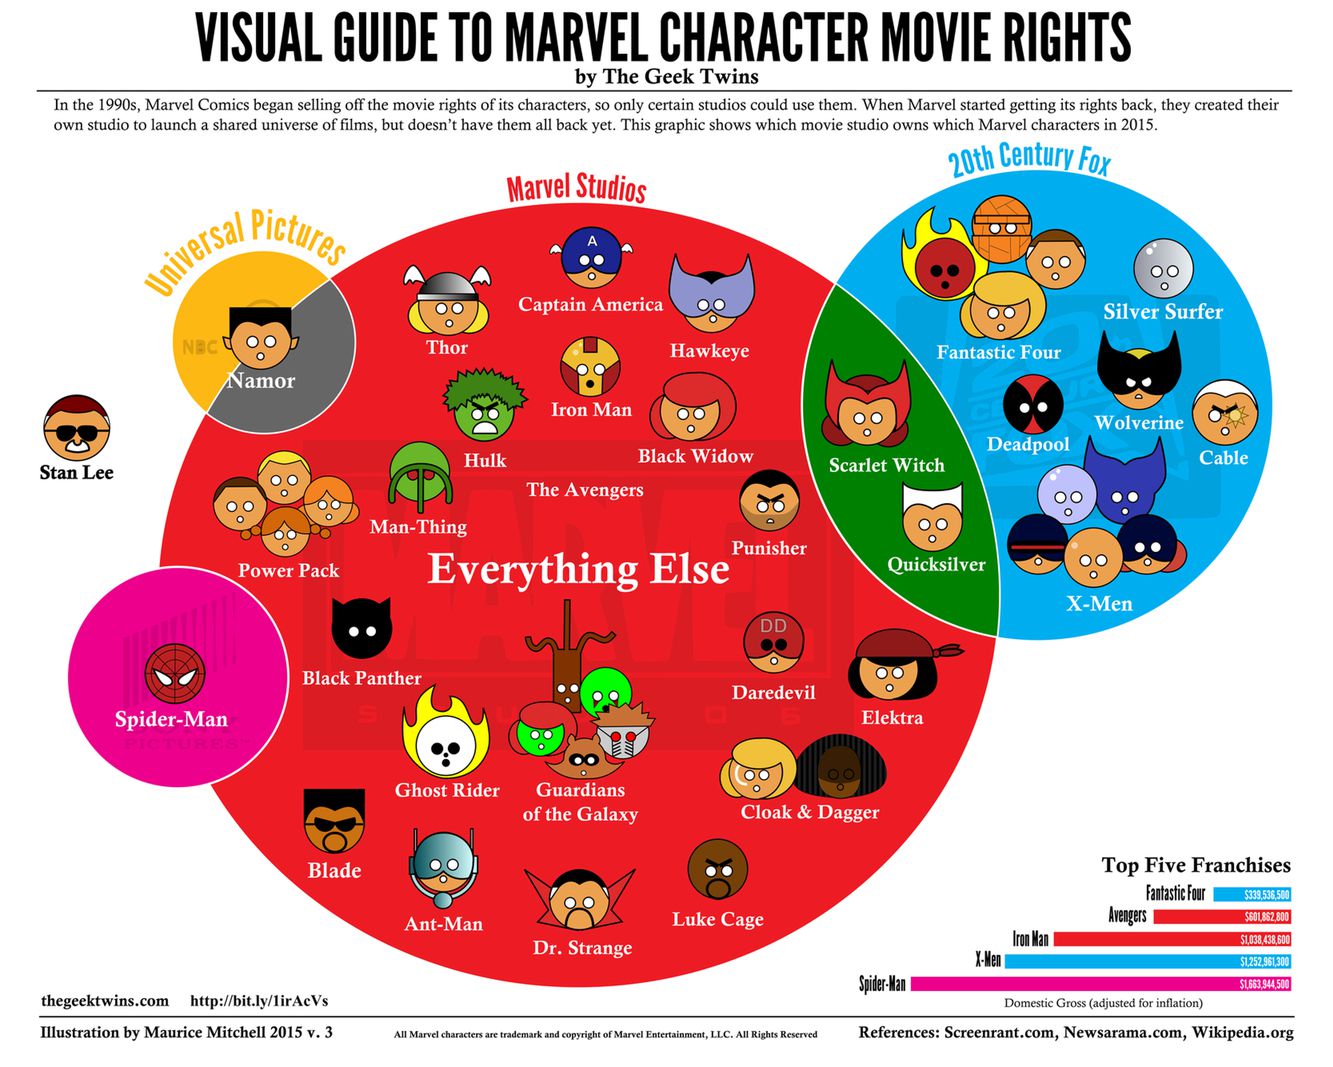 Marvel rights (1334 wide jpg) credit geek twins